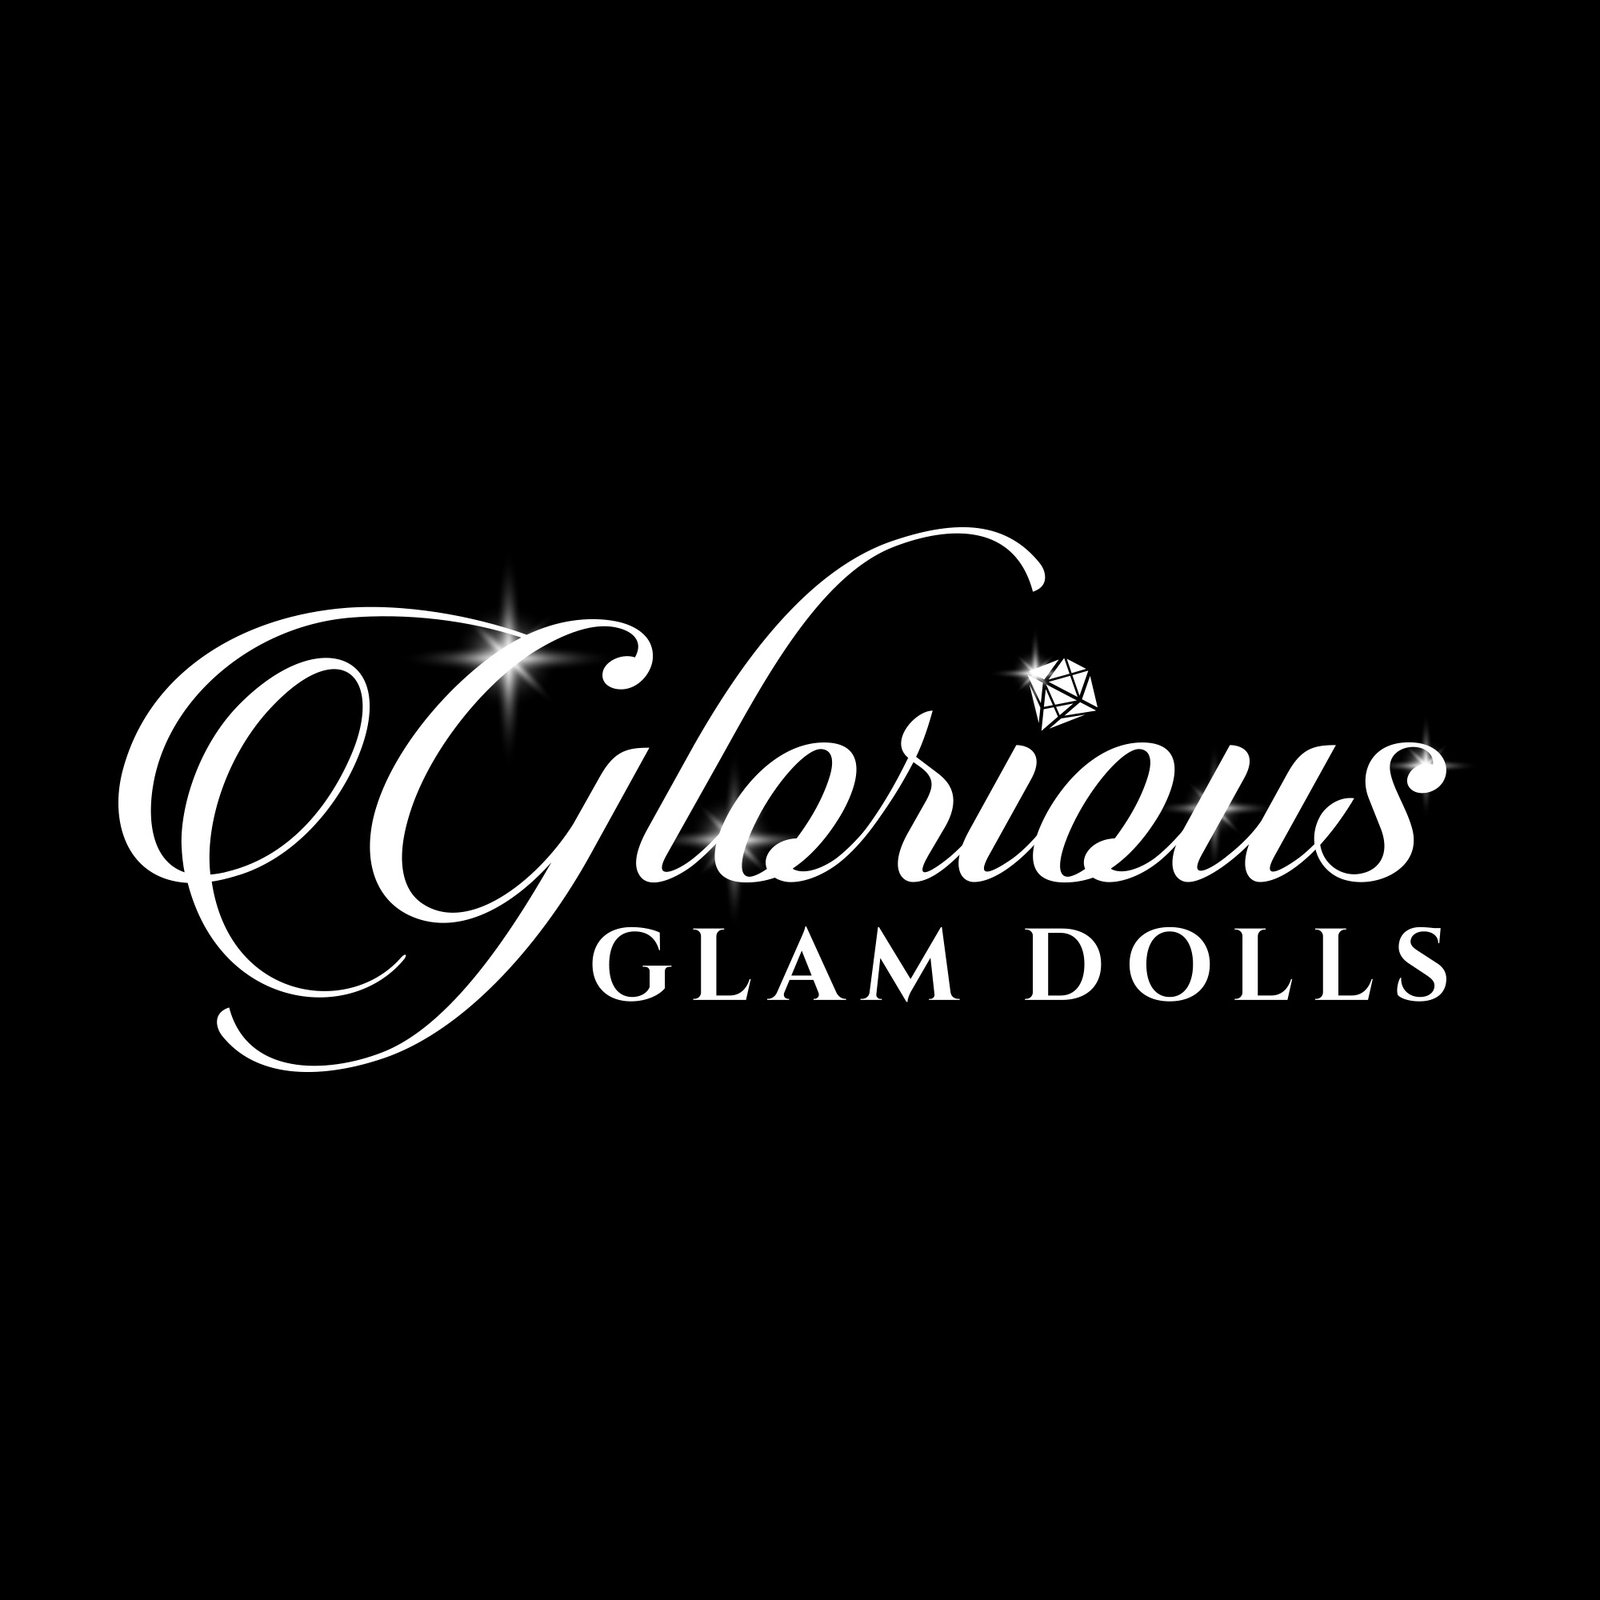 Glorious Glam Dolls